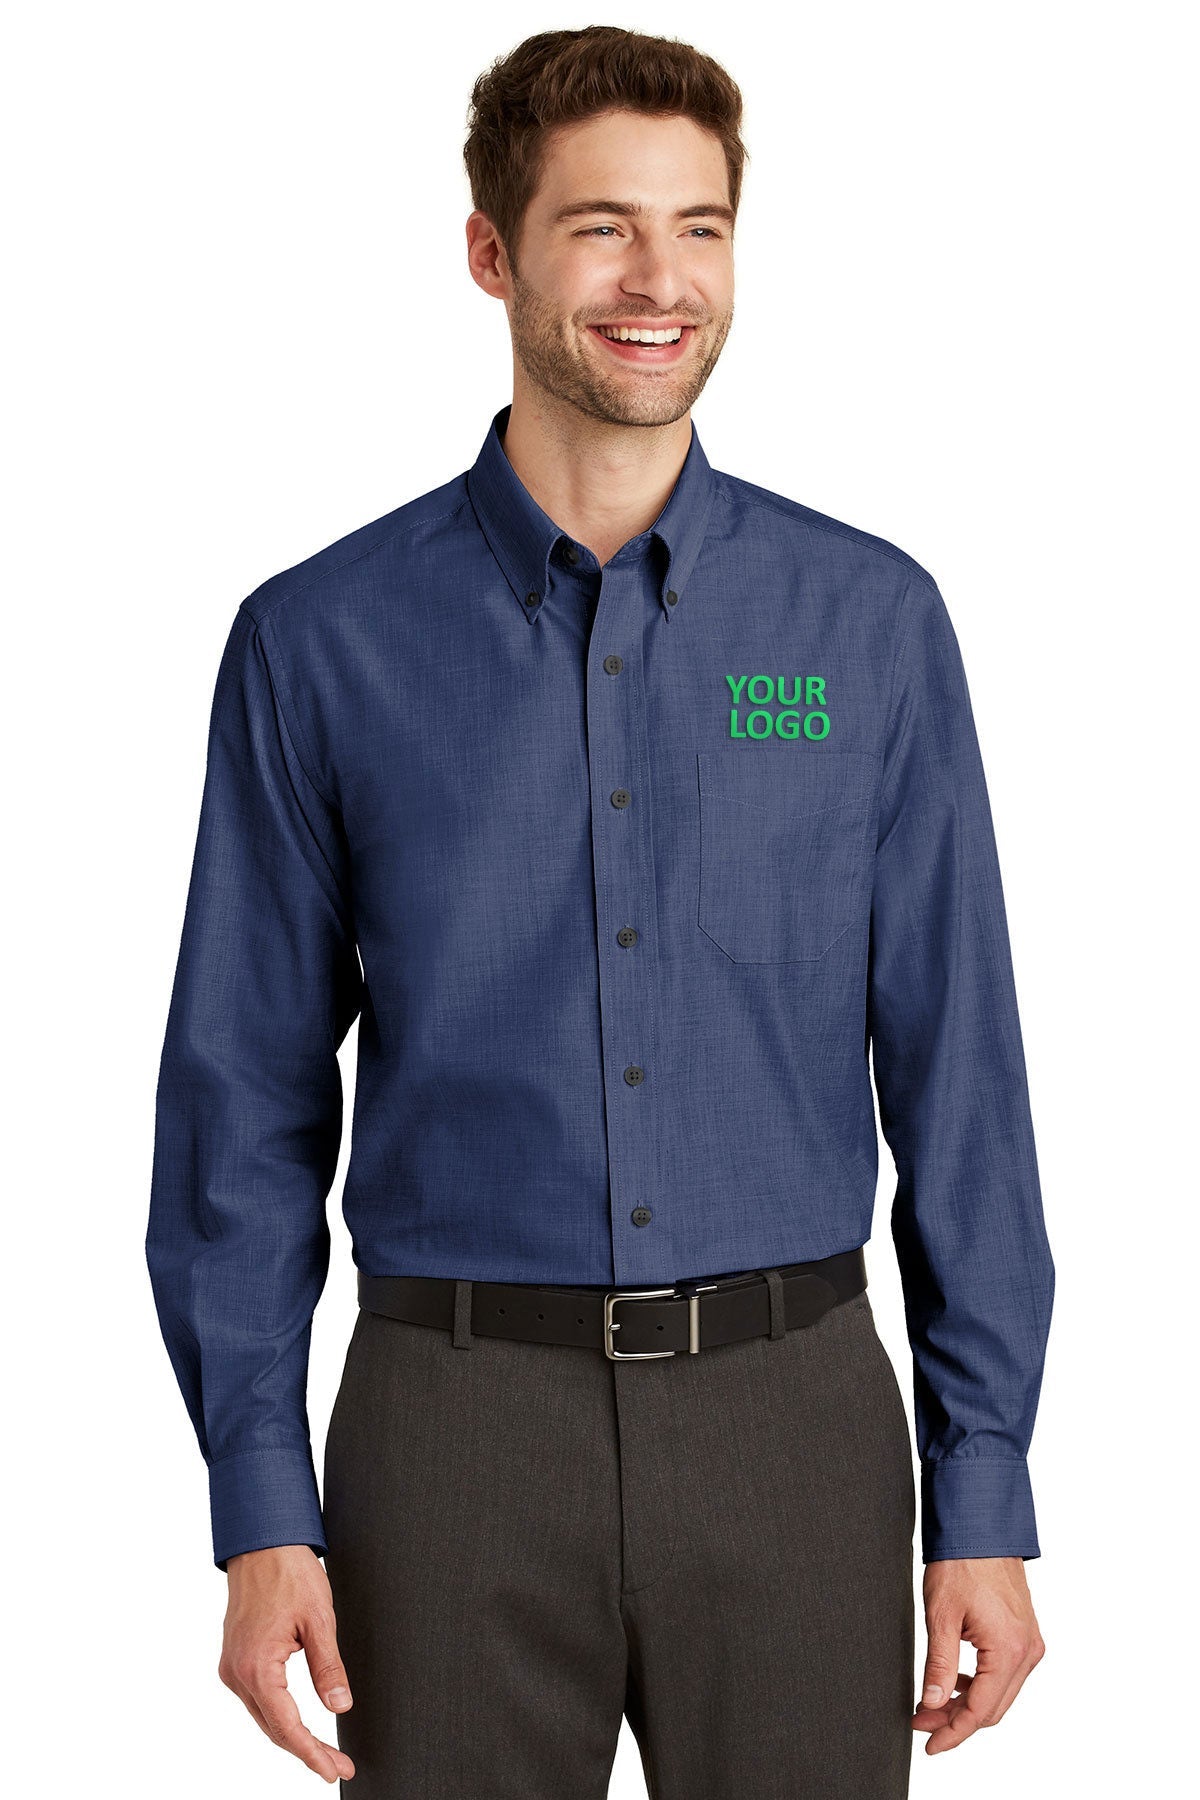 Port Authority Deep Blue TLS640 business shirts with company logo